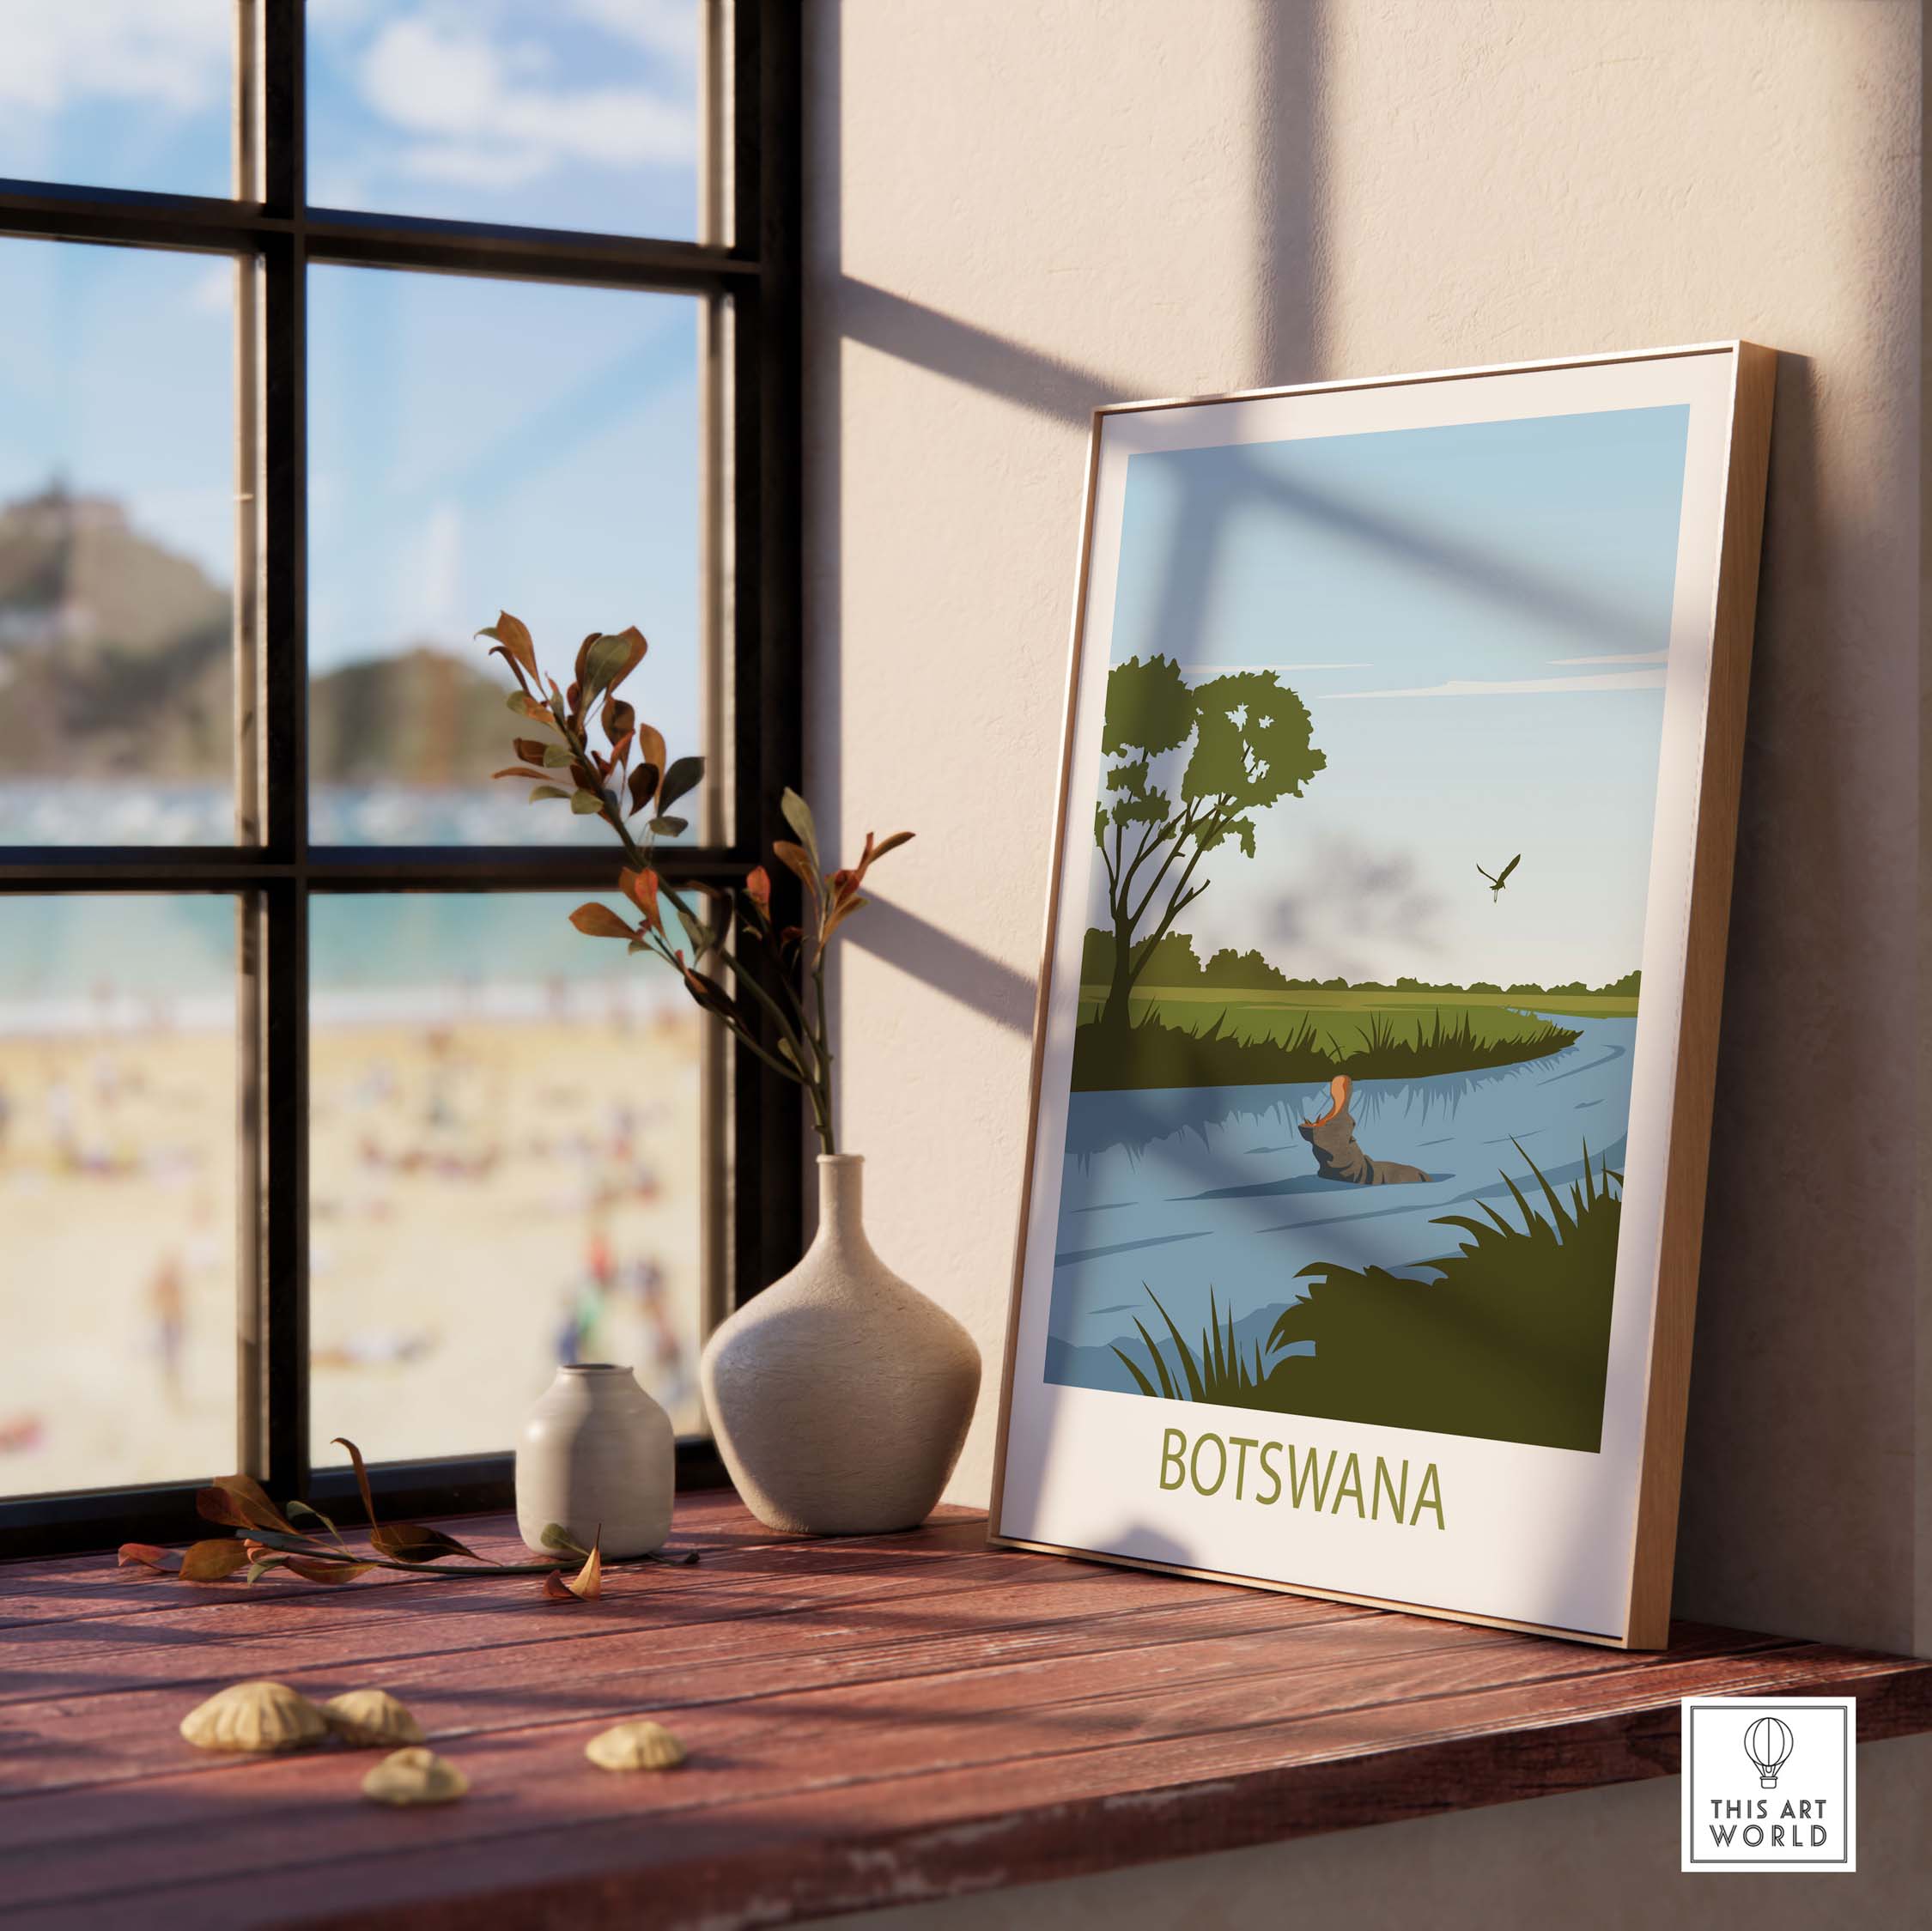 Botswana Print | Africa Travel Poster